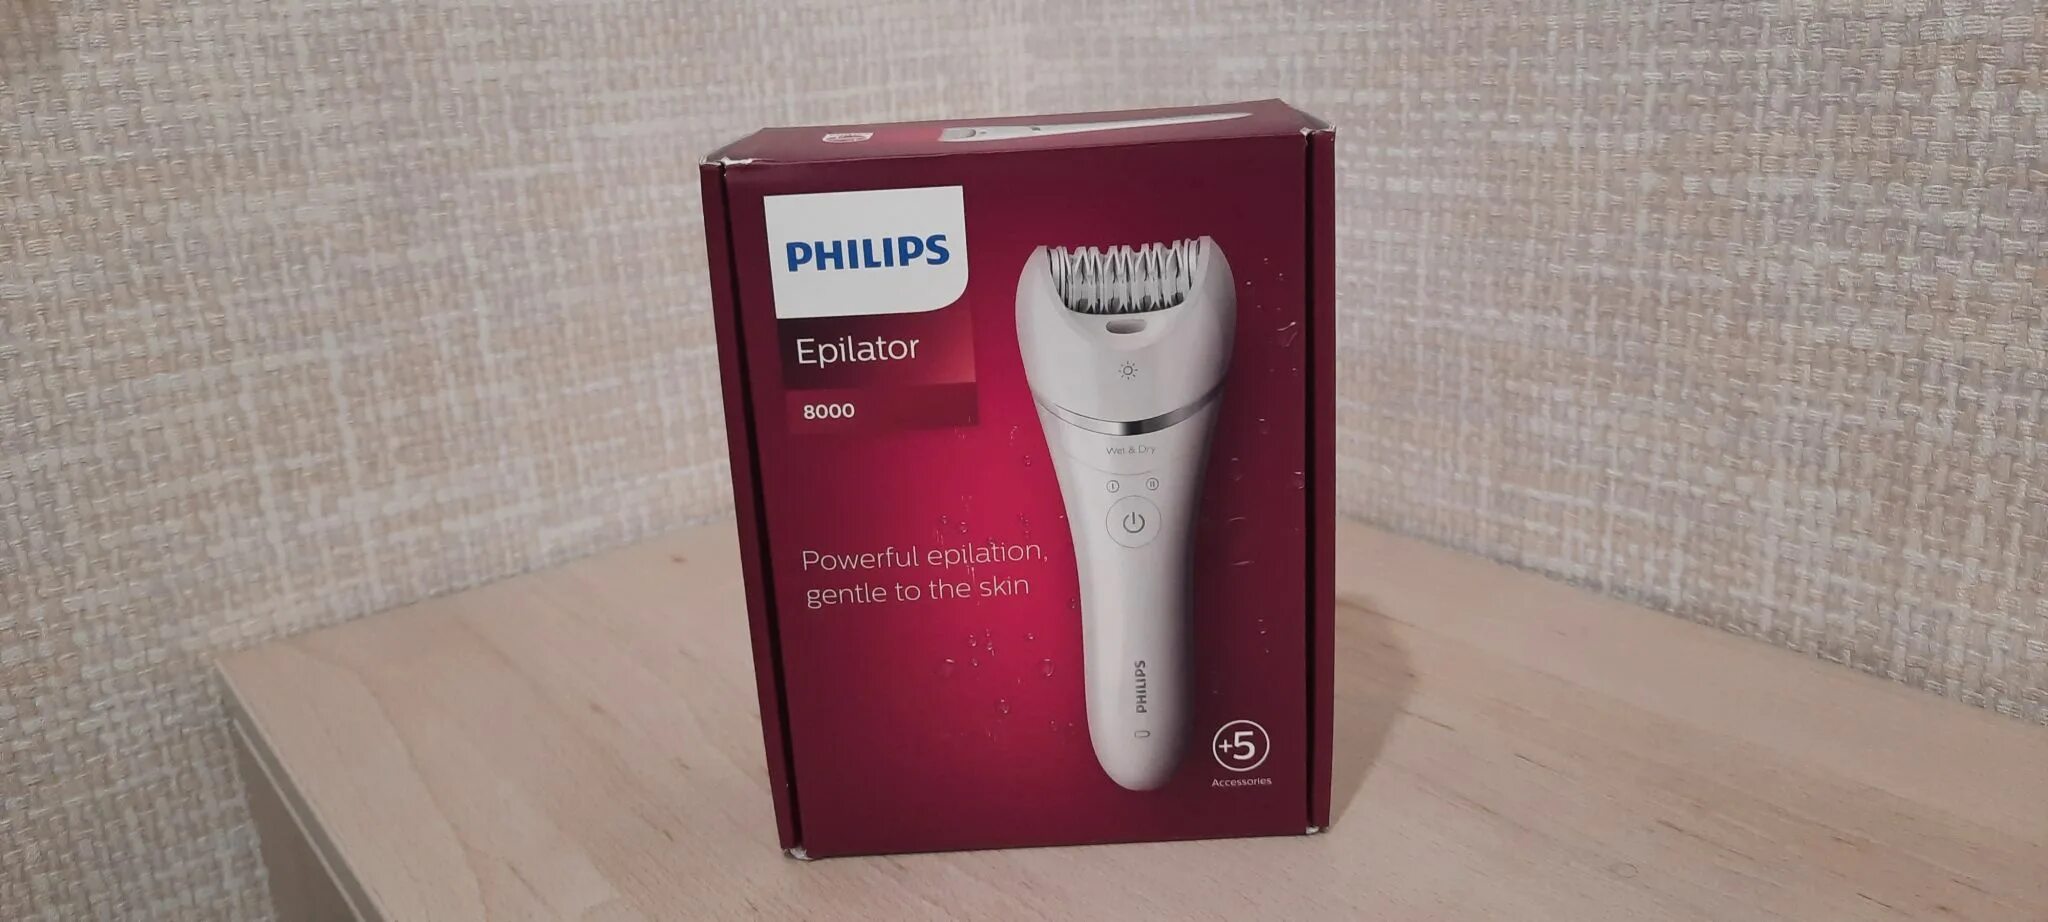 Philips epilator series 8000. Эпилятор Philips bre710/00. Эпилятор Philips bre710/05. Эпилятор Филипс бре 710. Philips bre700 Epilator Series 8000.